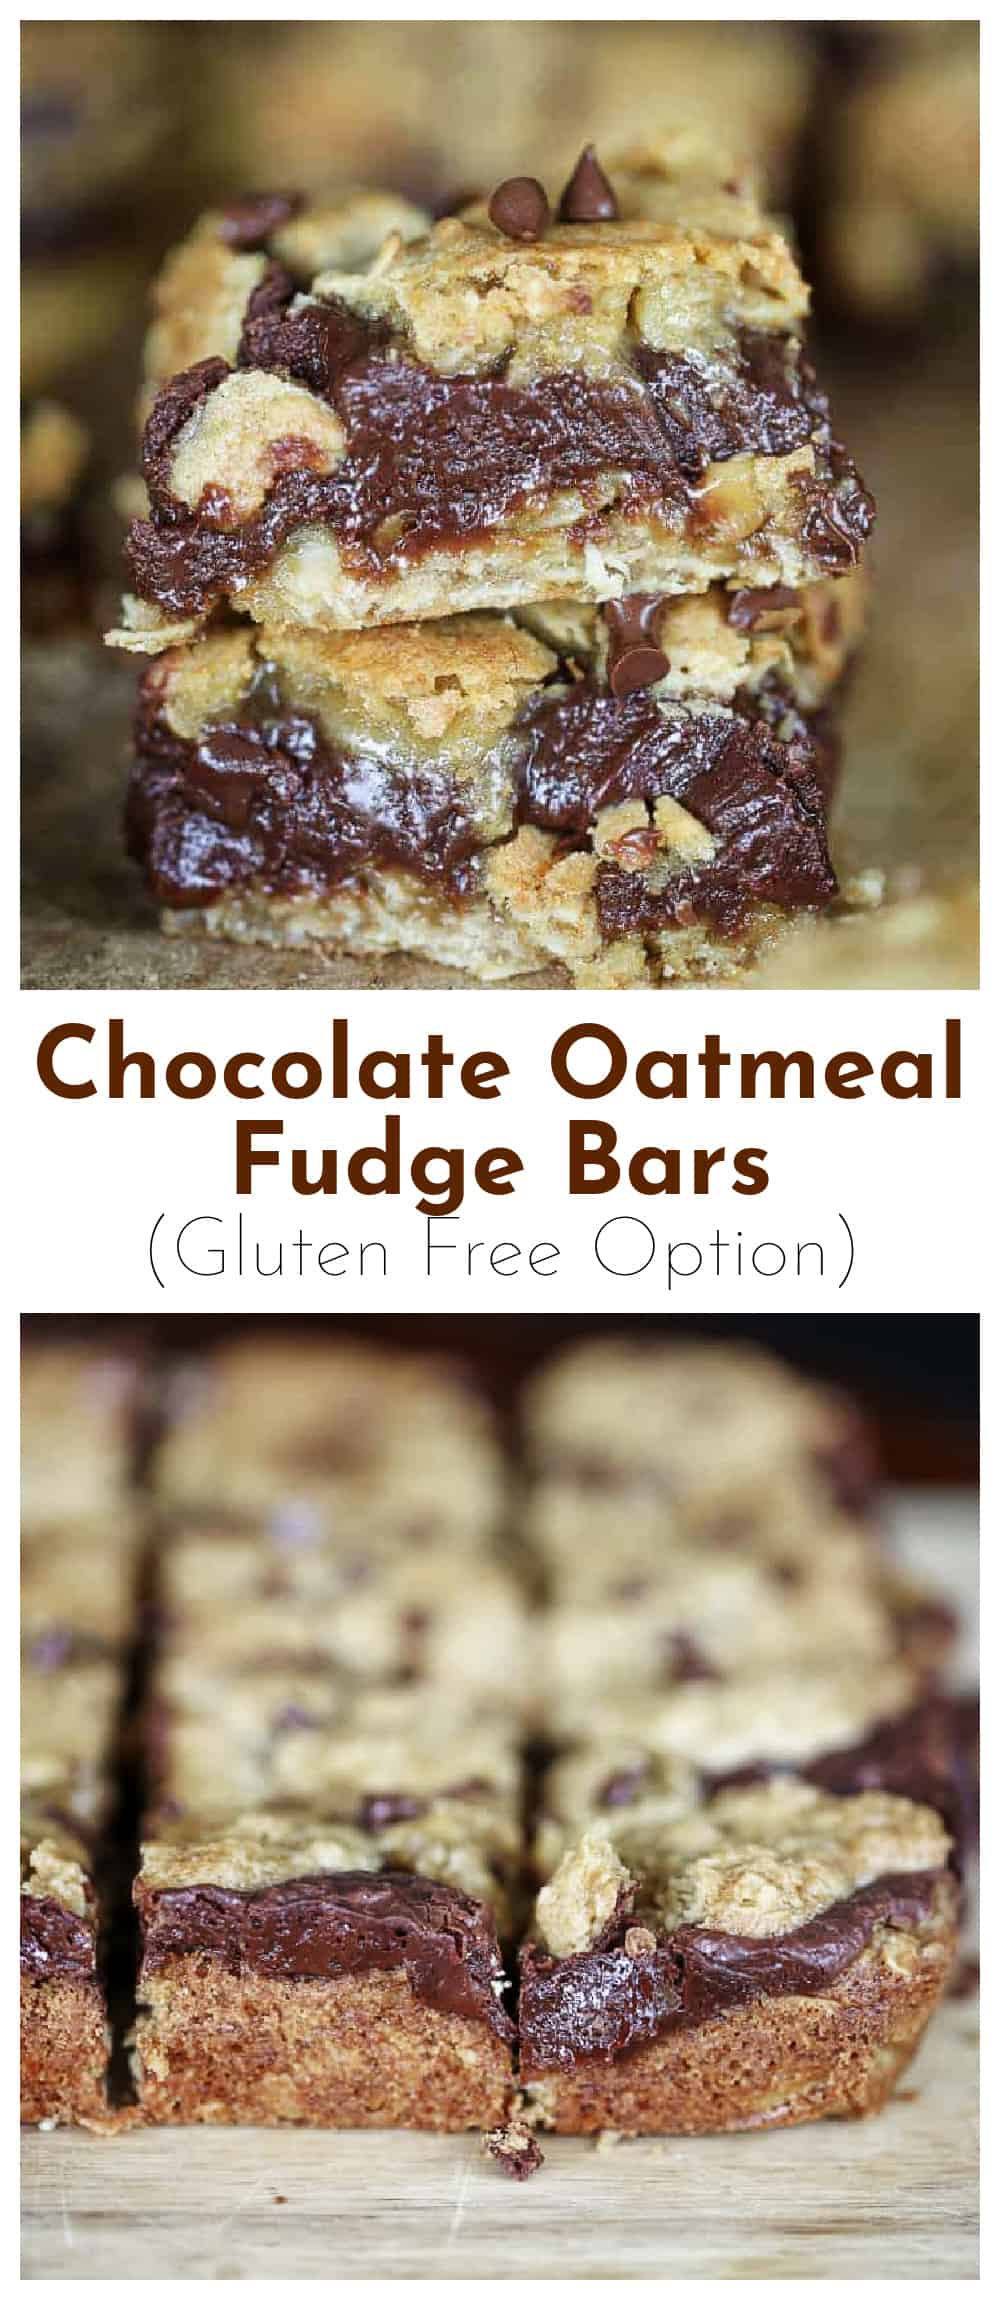 Chocolate Oatmeal Fudge Bars (Gluten Free Option)